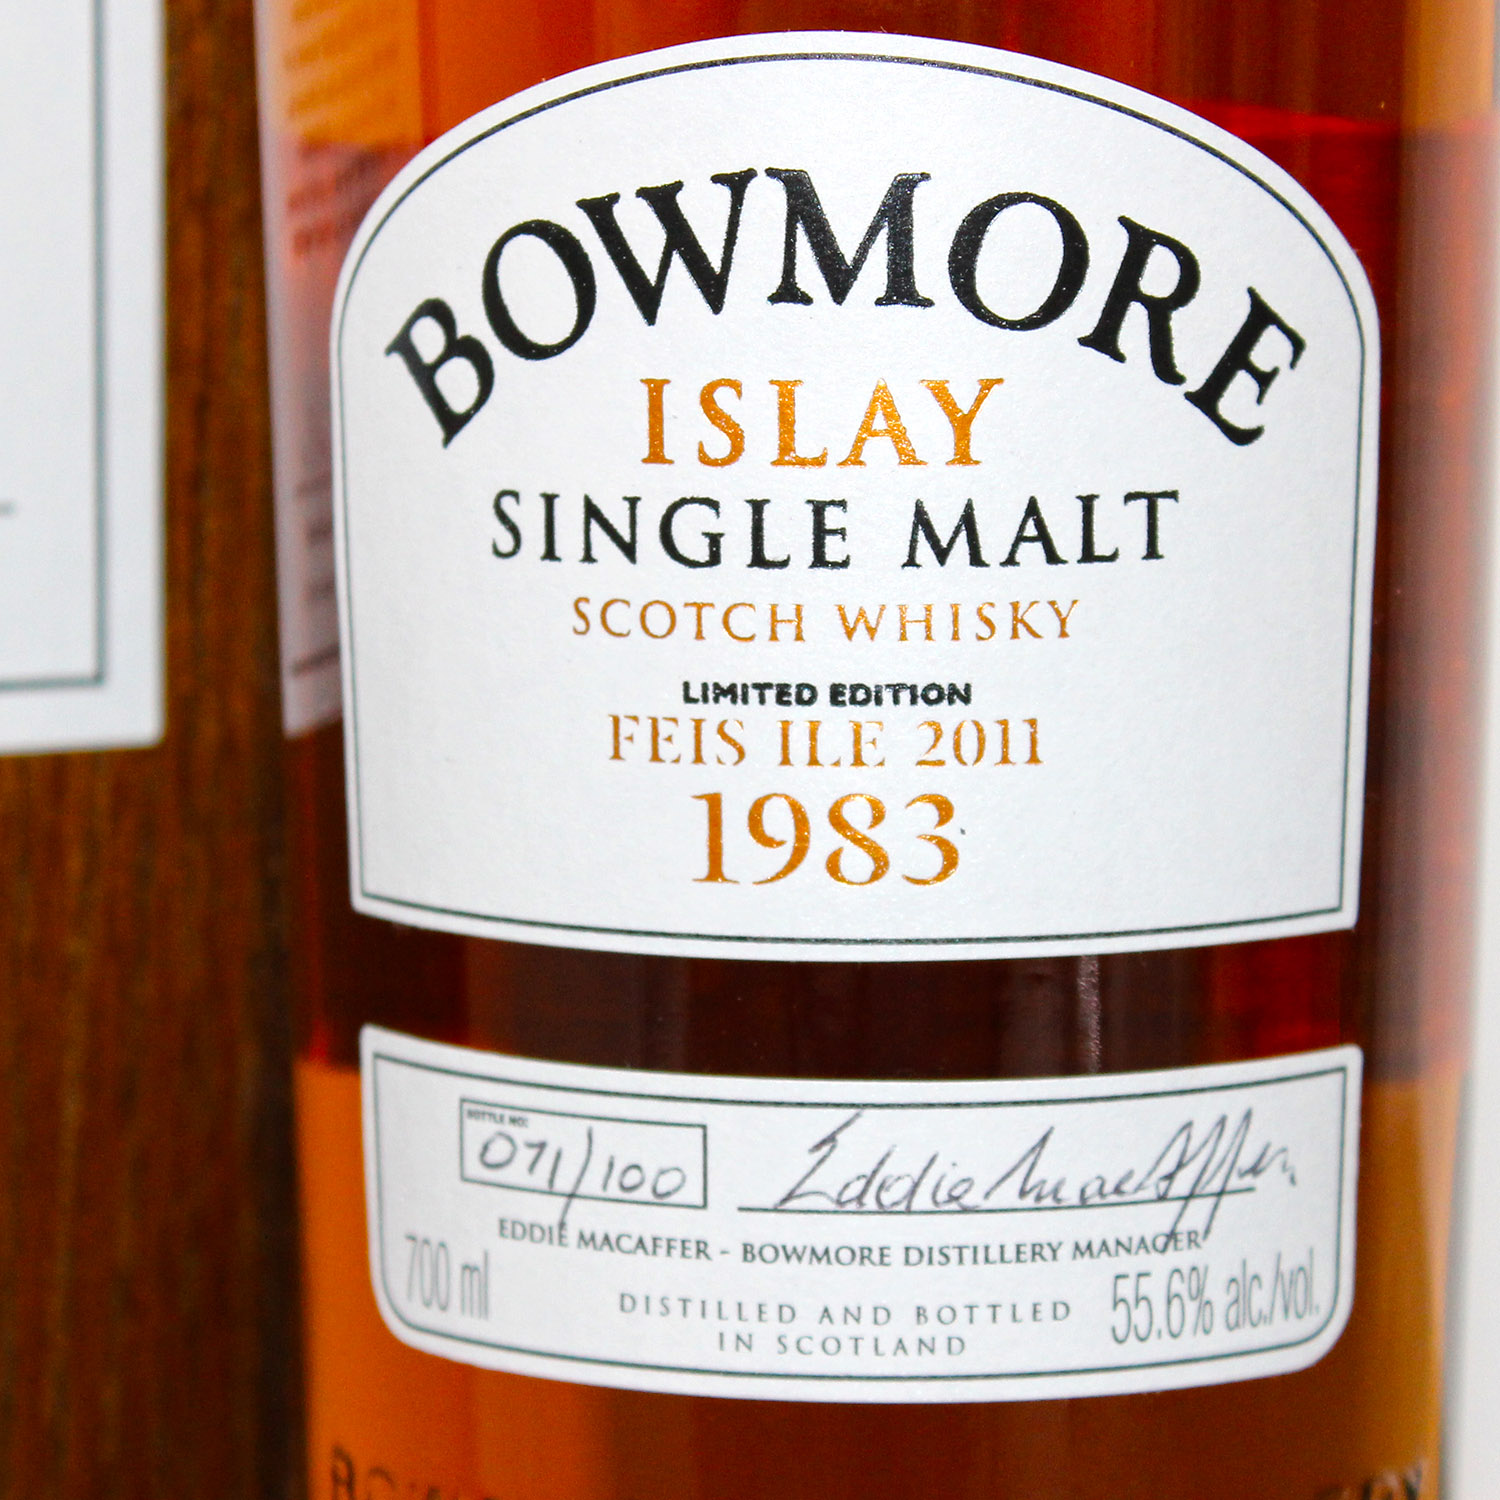 Bowmore 1983 Feis Ile 2011 Single Malt Scotch Whisky Label